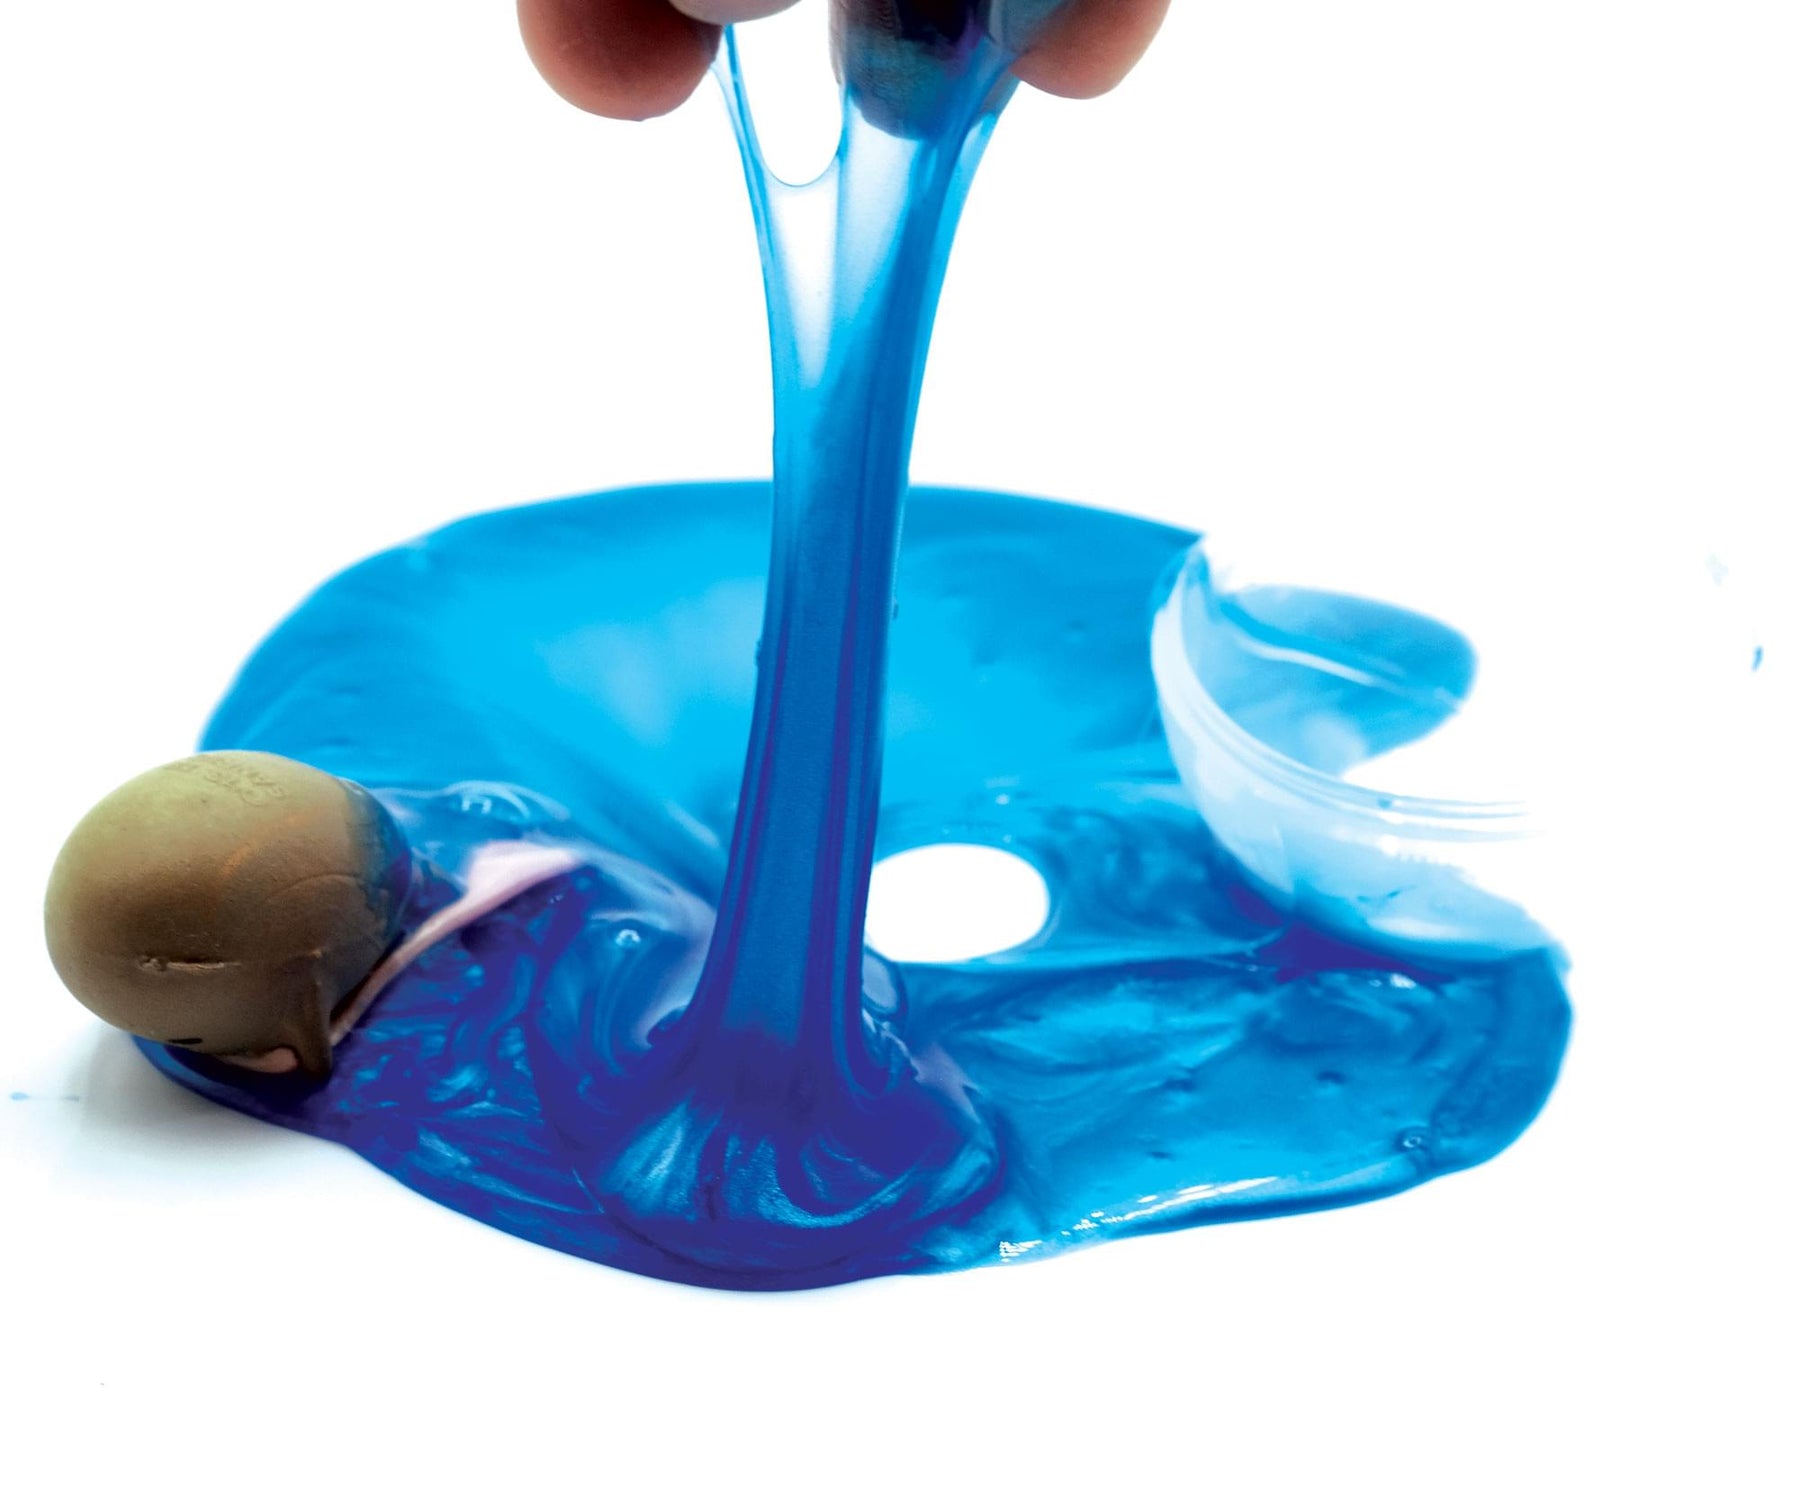 Gudetama The Lazy Egg Metallic Slime & Mini Figure | Blue